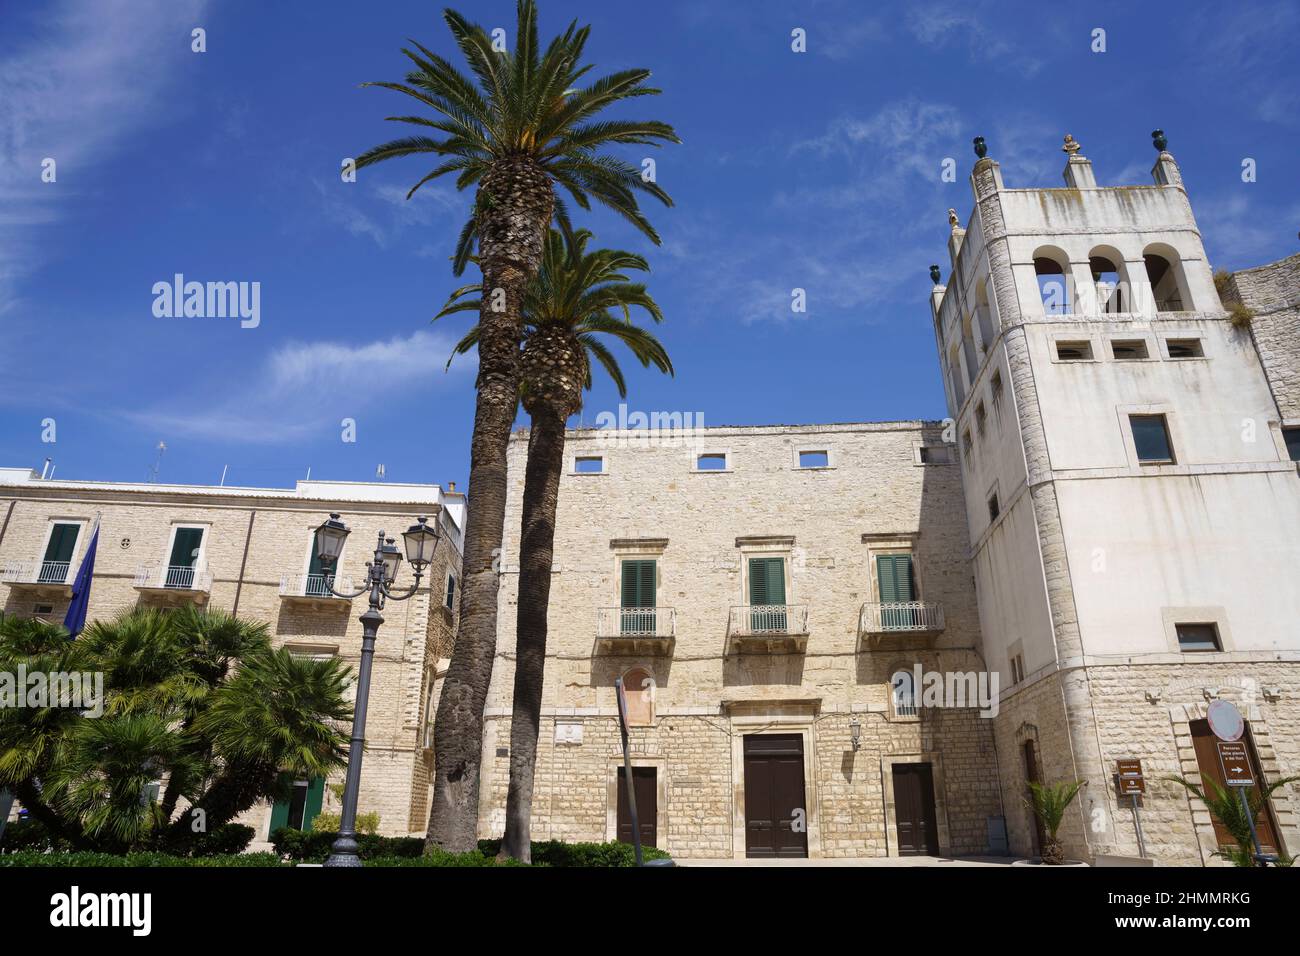 Terlizzi, historic city in Bari province, Apulia, Italy: typical buildings Stock Photo